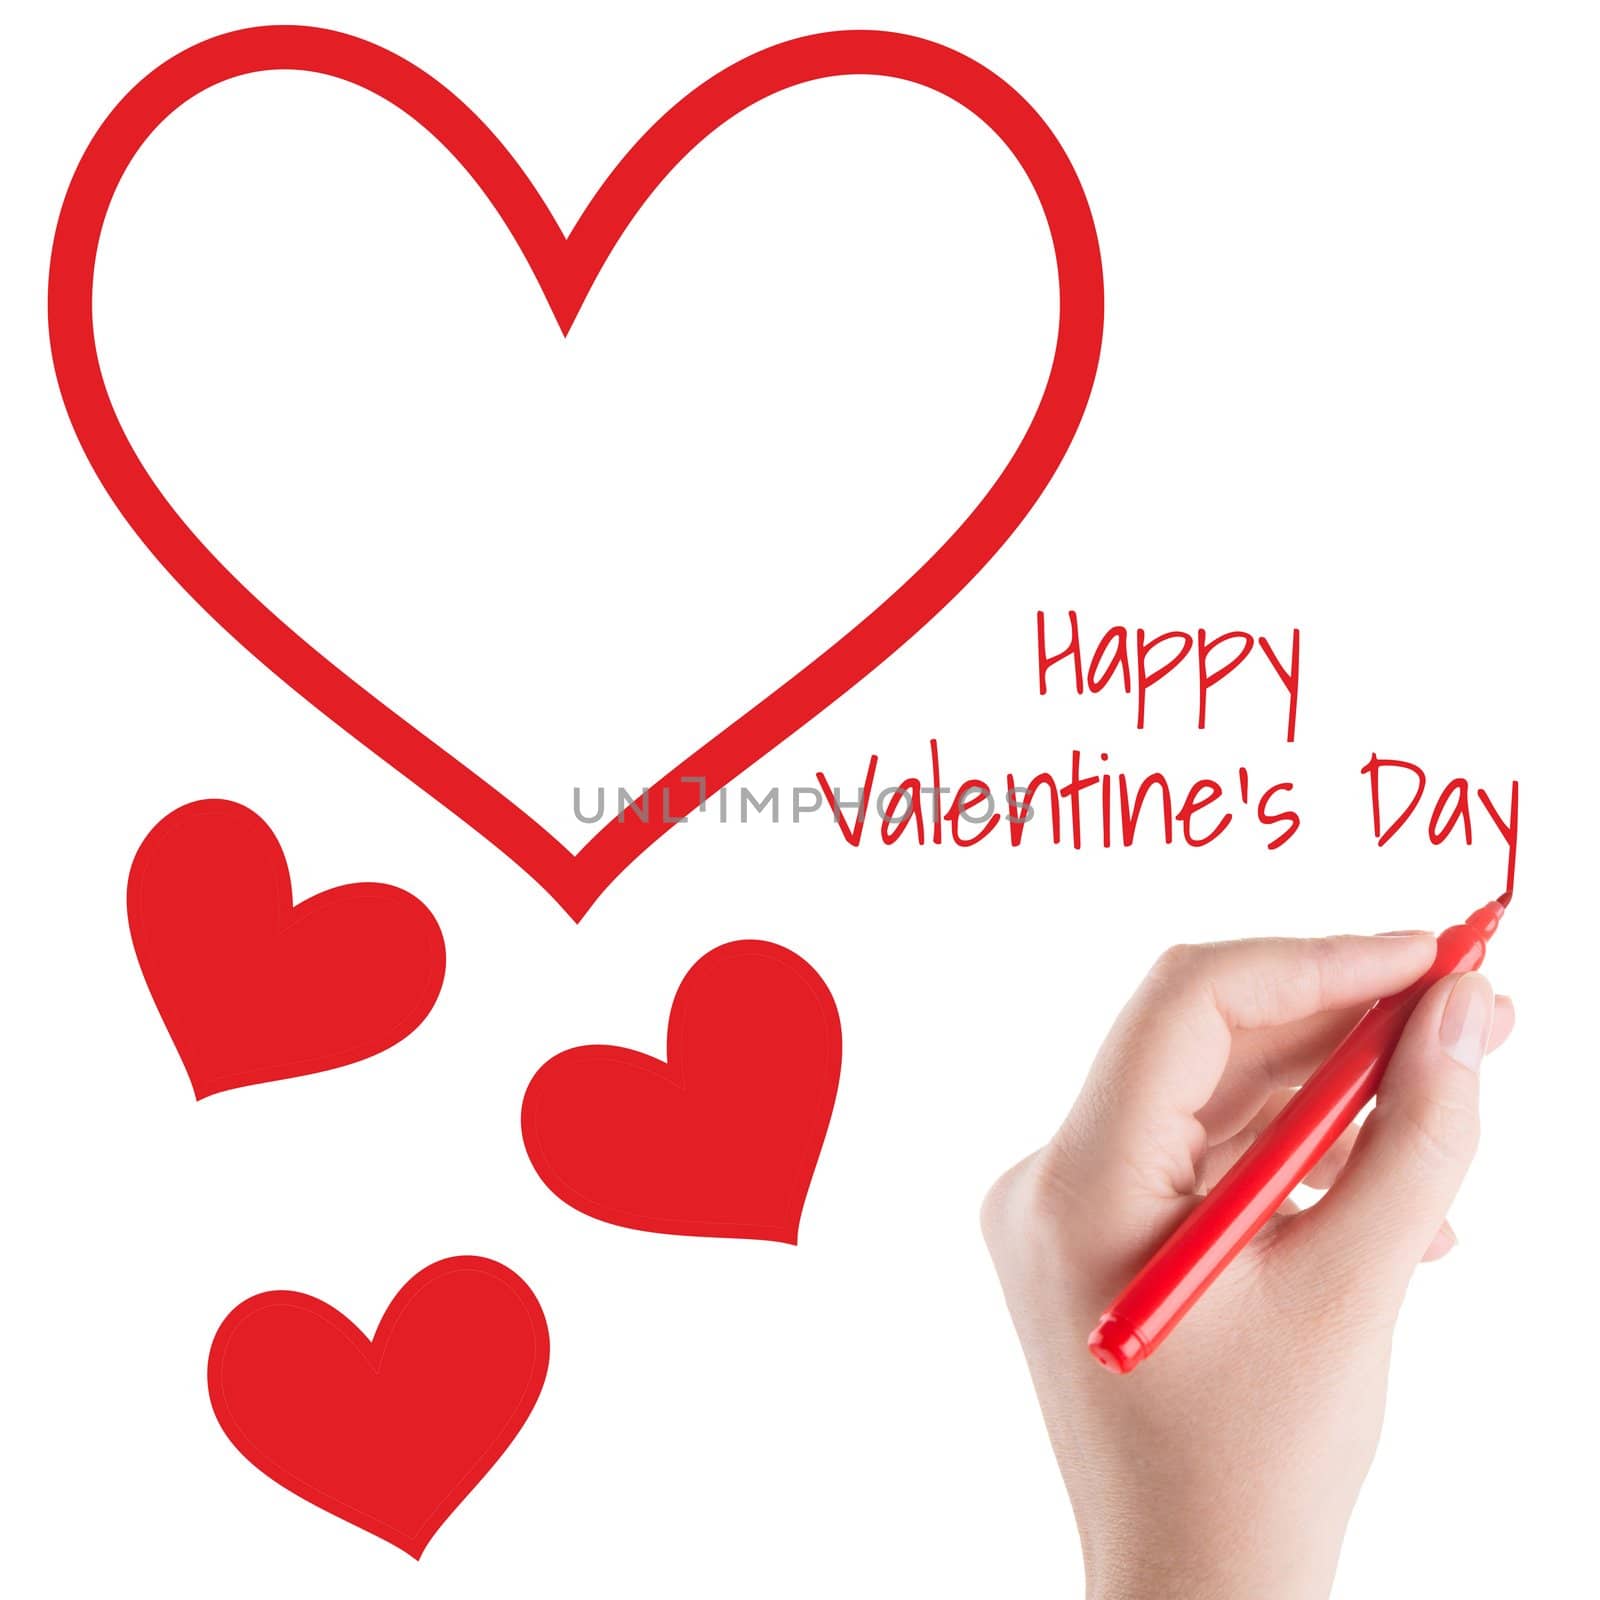 Happy Valentine�s Day by Emevil